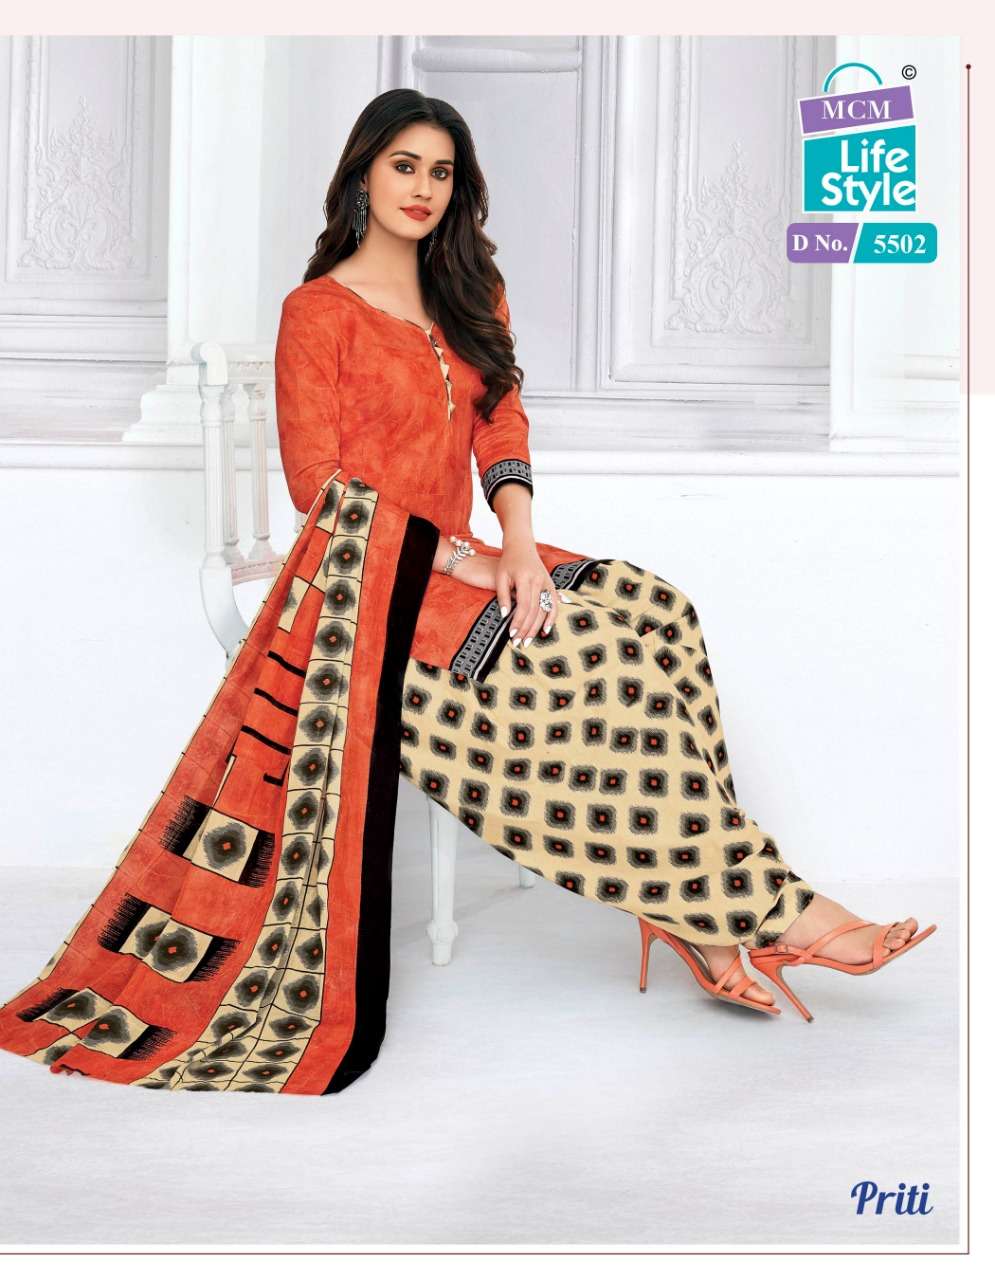 Priri Vol 4 Mcm Life Style Cotton Latest Designer Salwar Suit